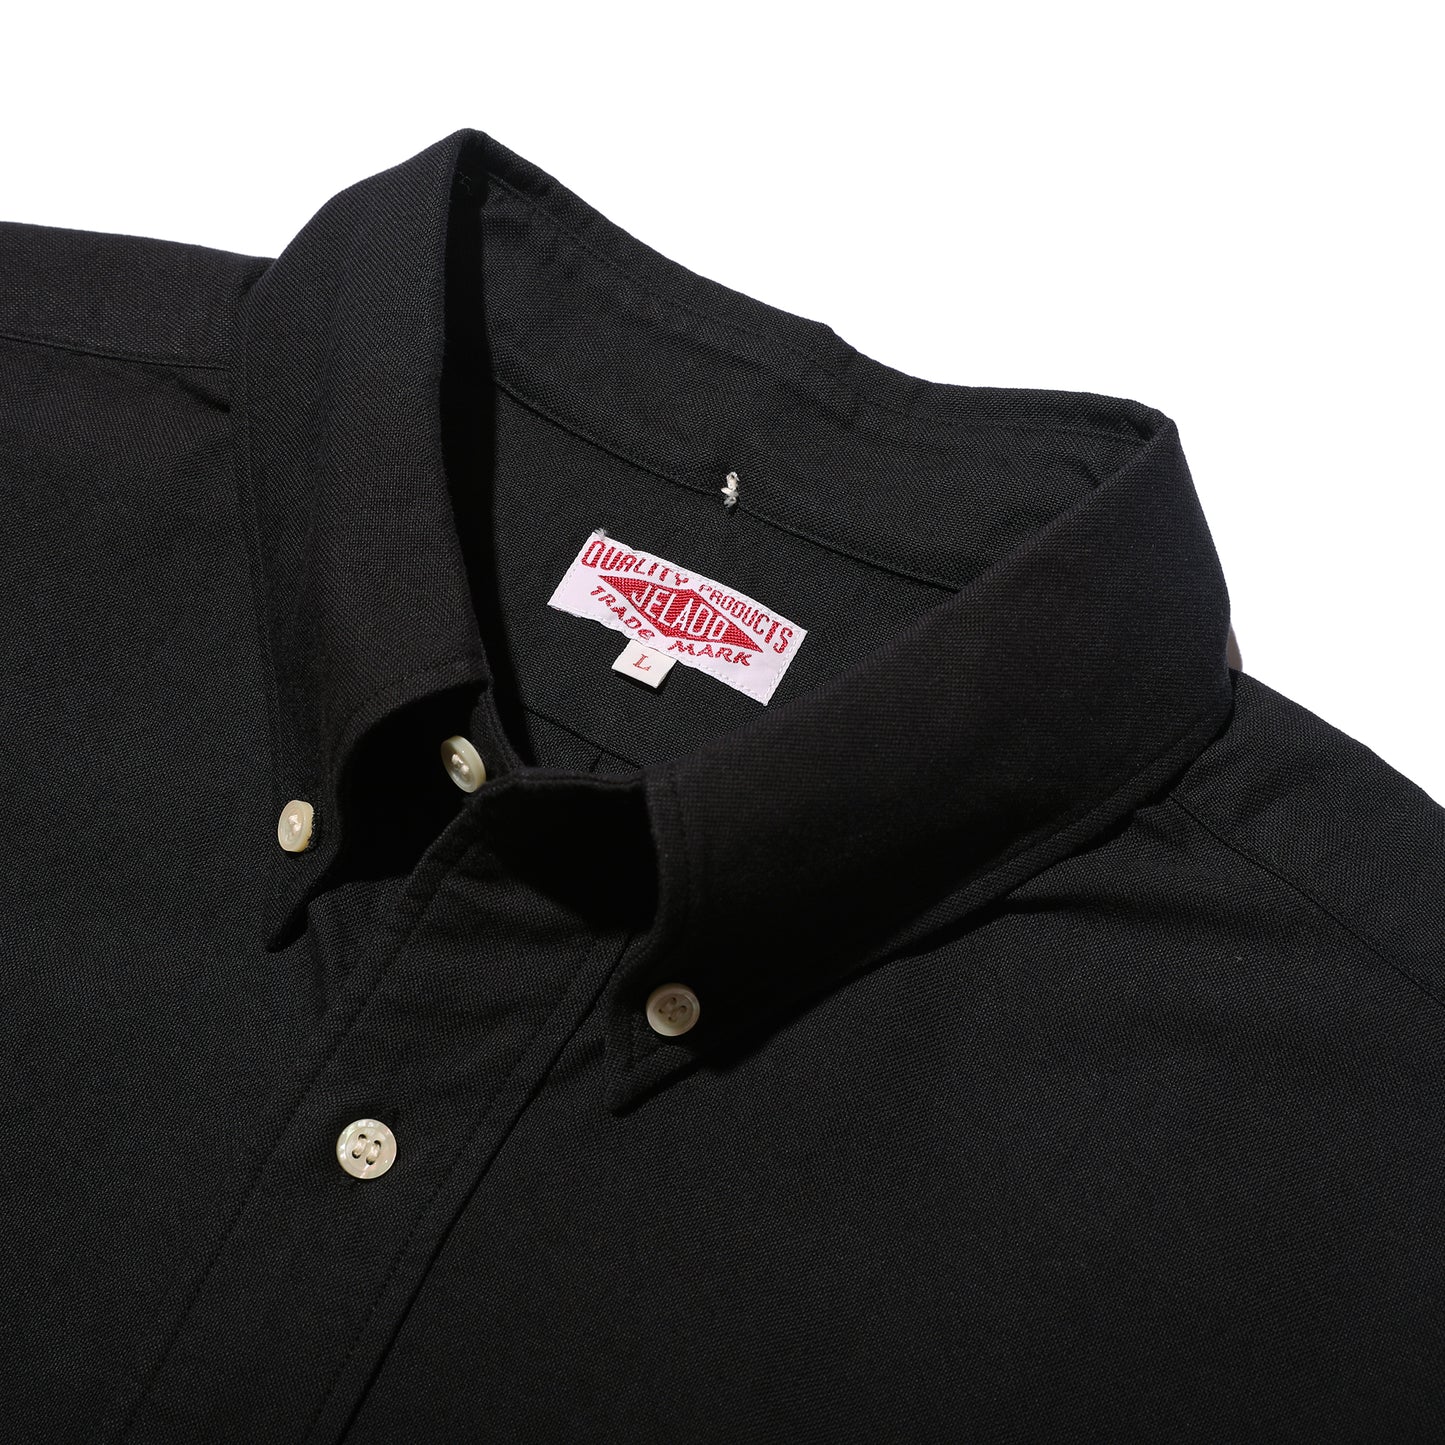 JELADO Madison(マディソン) Black BD shirt【JP61106】